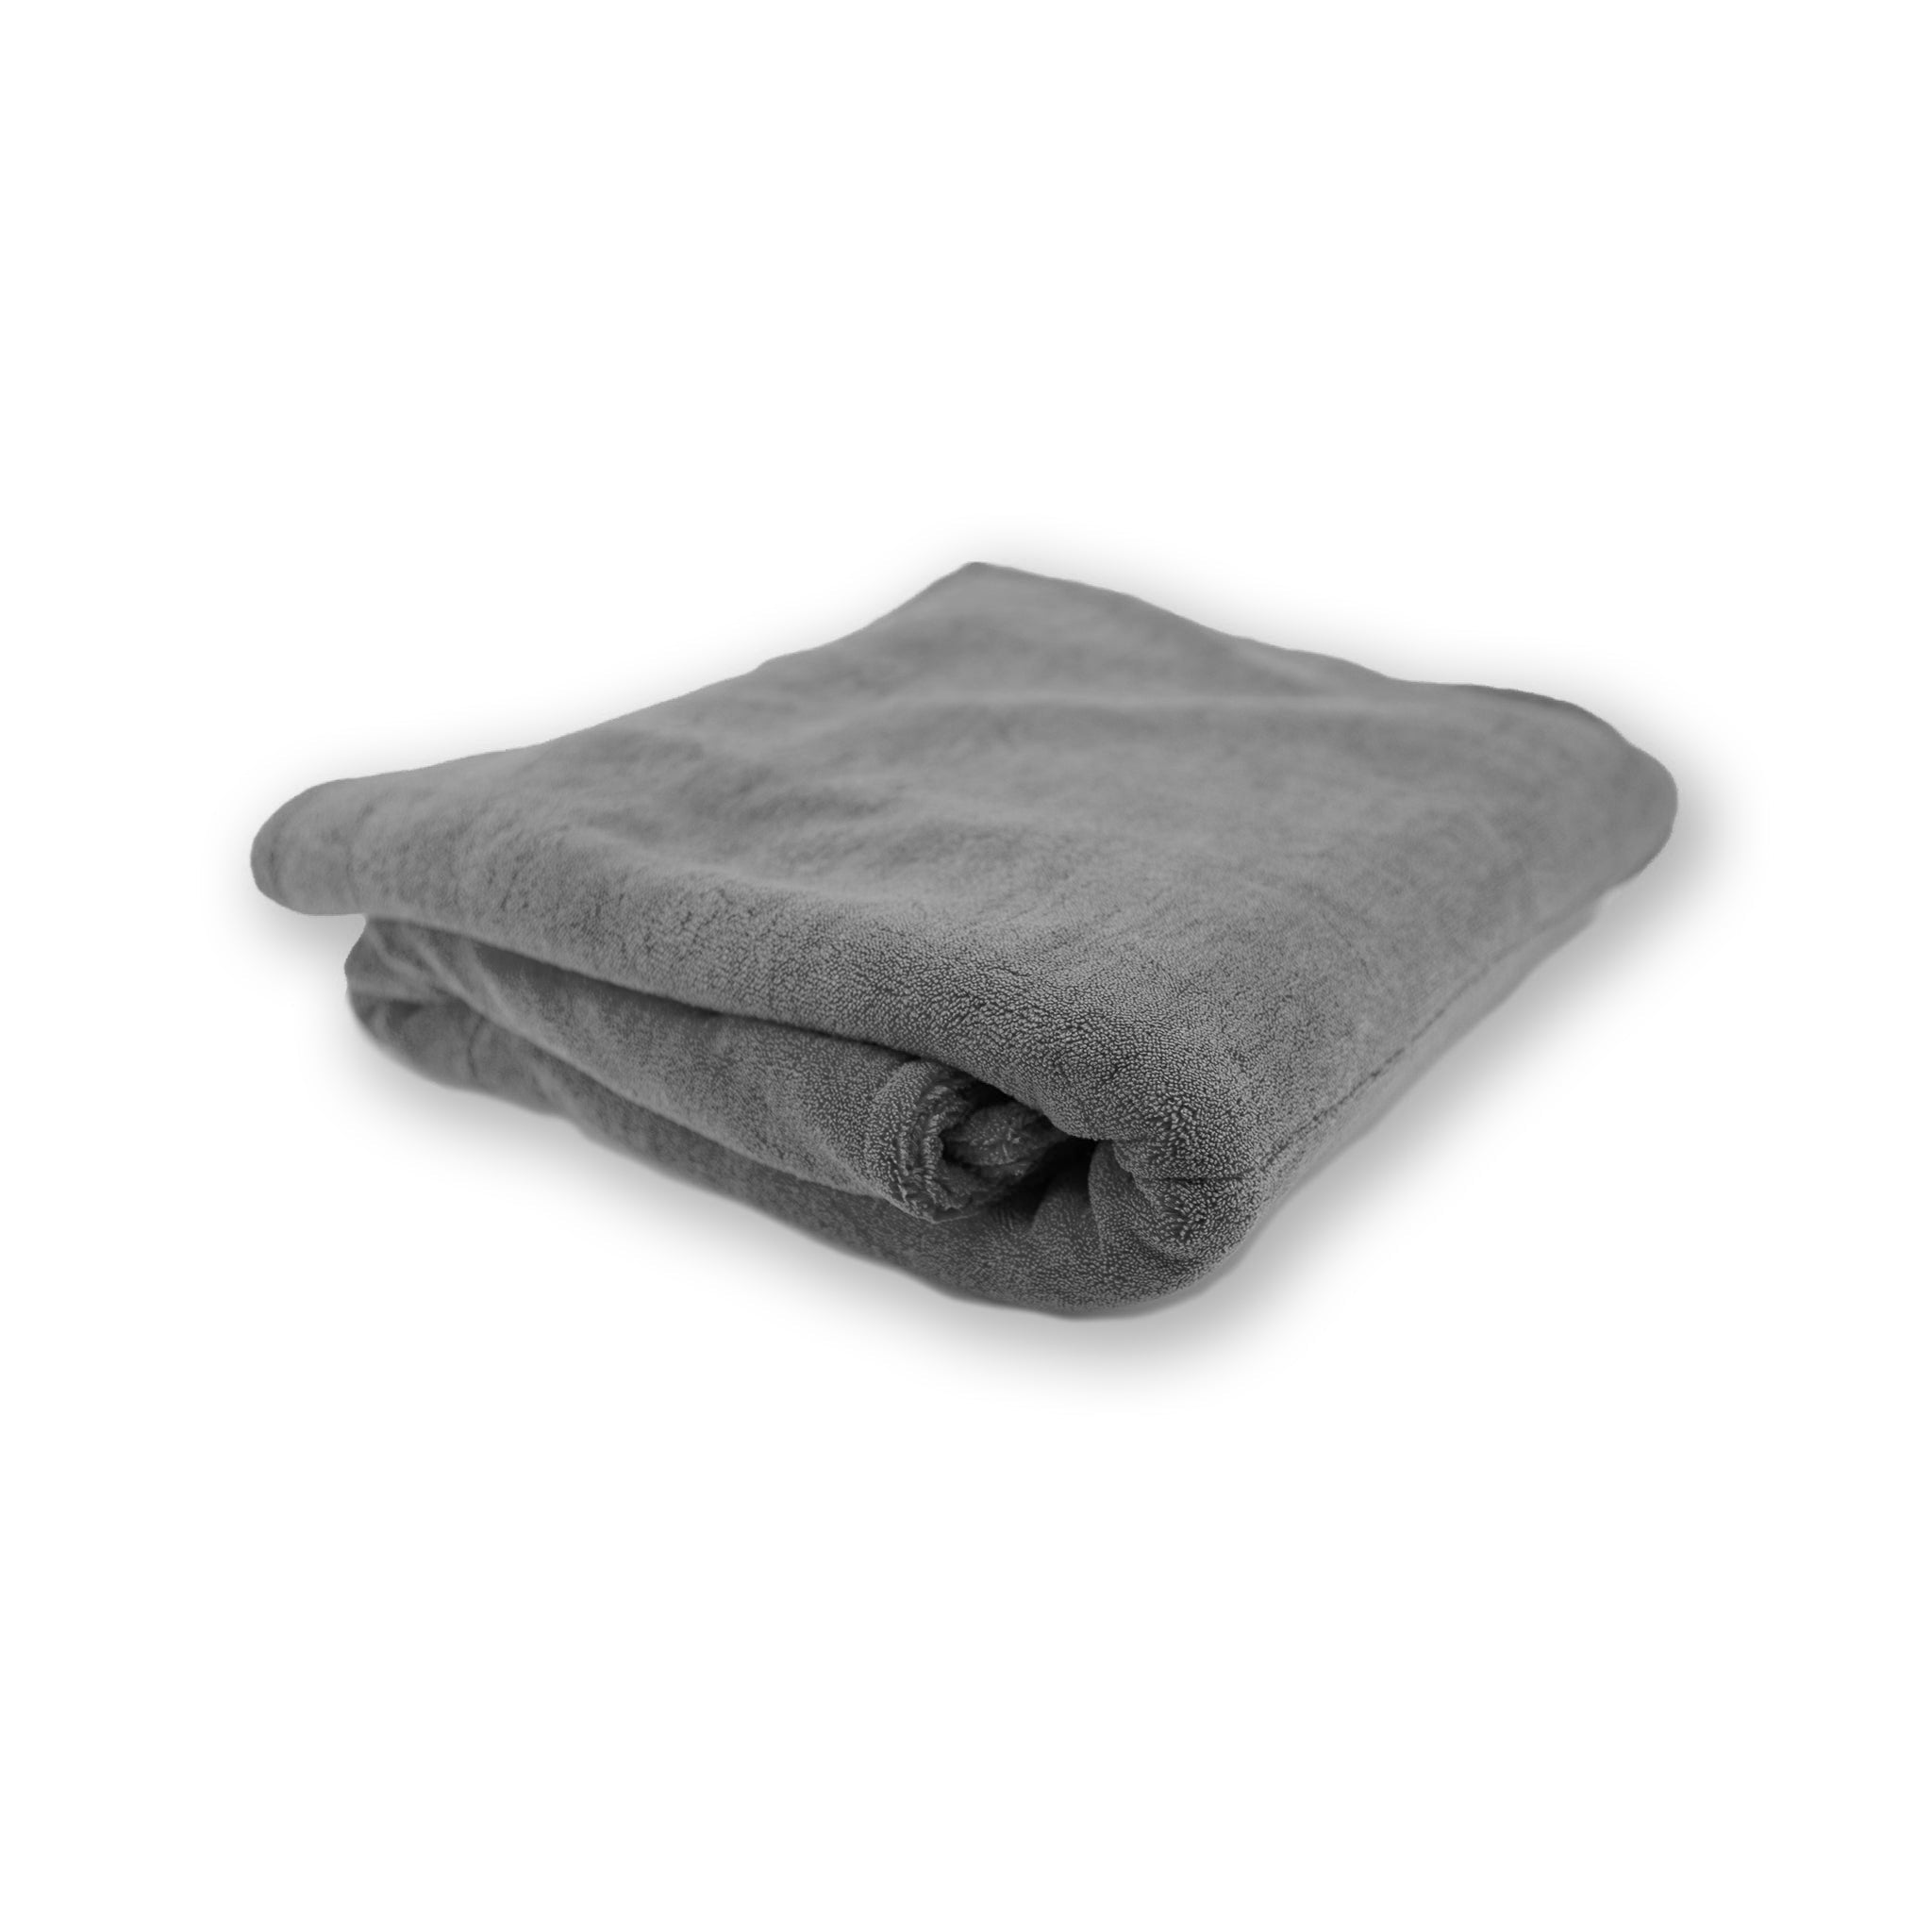 KLIN Drying Duo Evo Towel | Large 31 x 30 | Gray